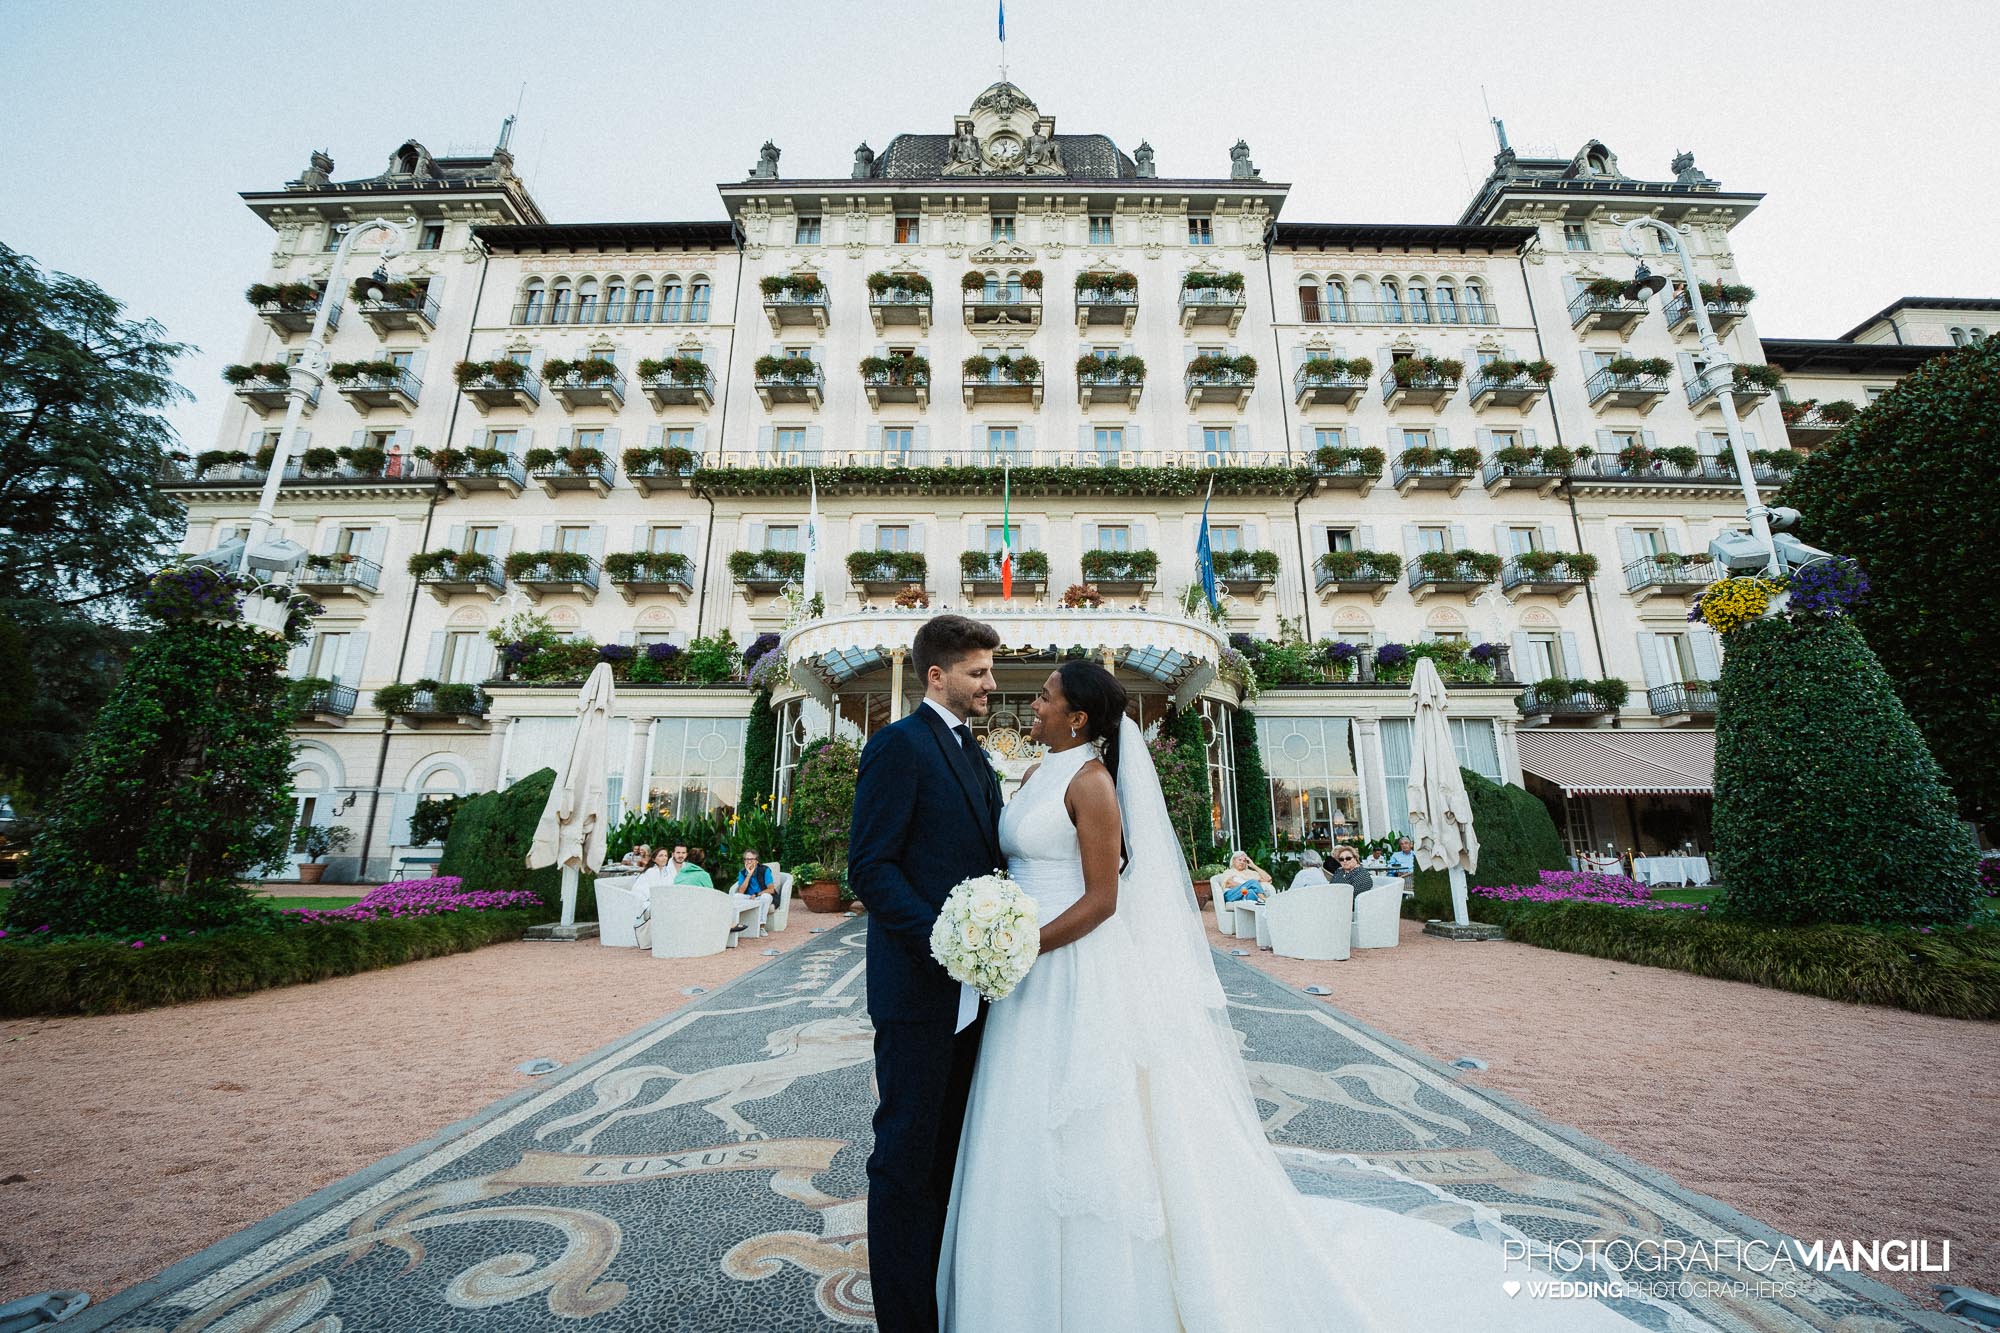 wedding photo grand hotel des iles borromees lake maggiore italy amanda davide 101